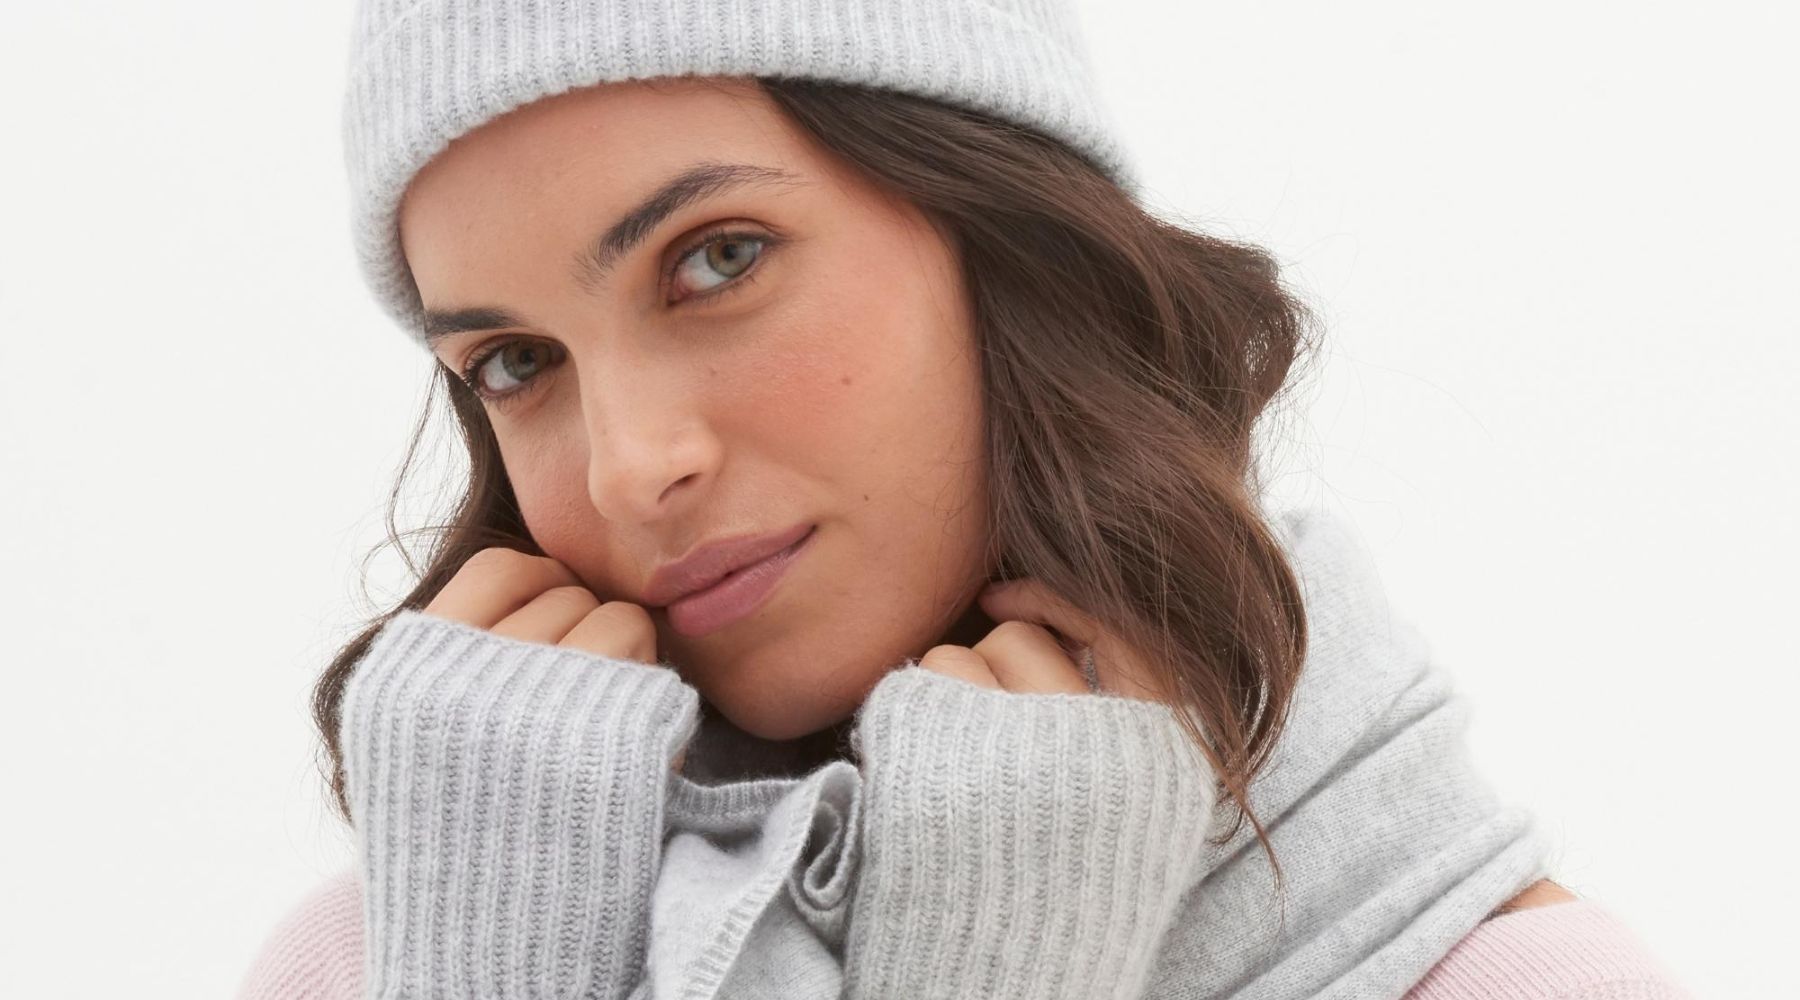 5 ways to keep warm with cashmere